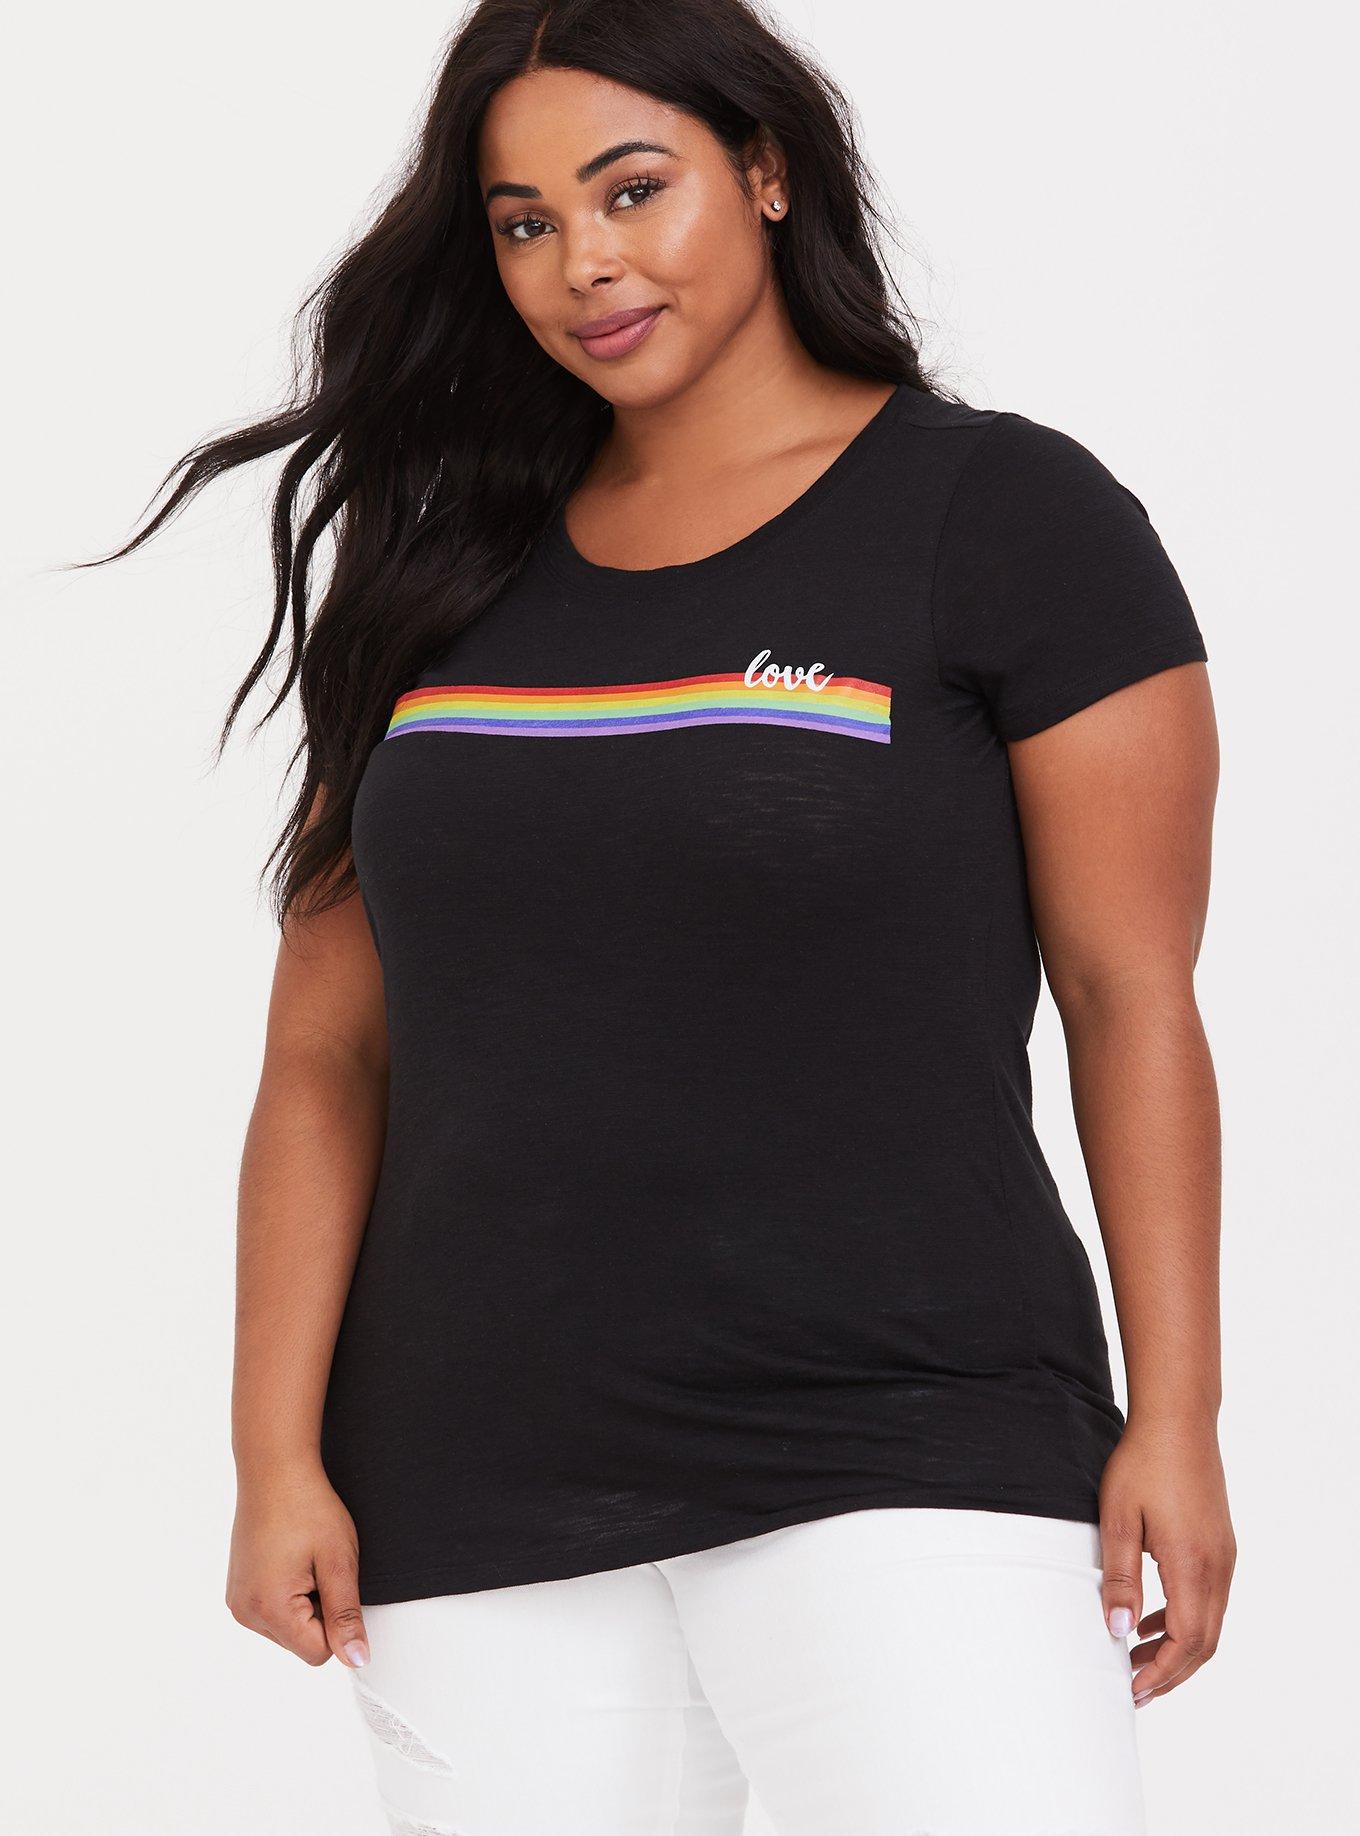 Plus Size - Black & Rainbow Stripe Love Slim Fit Tee - Torrid